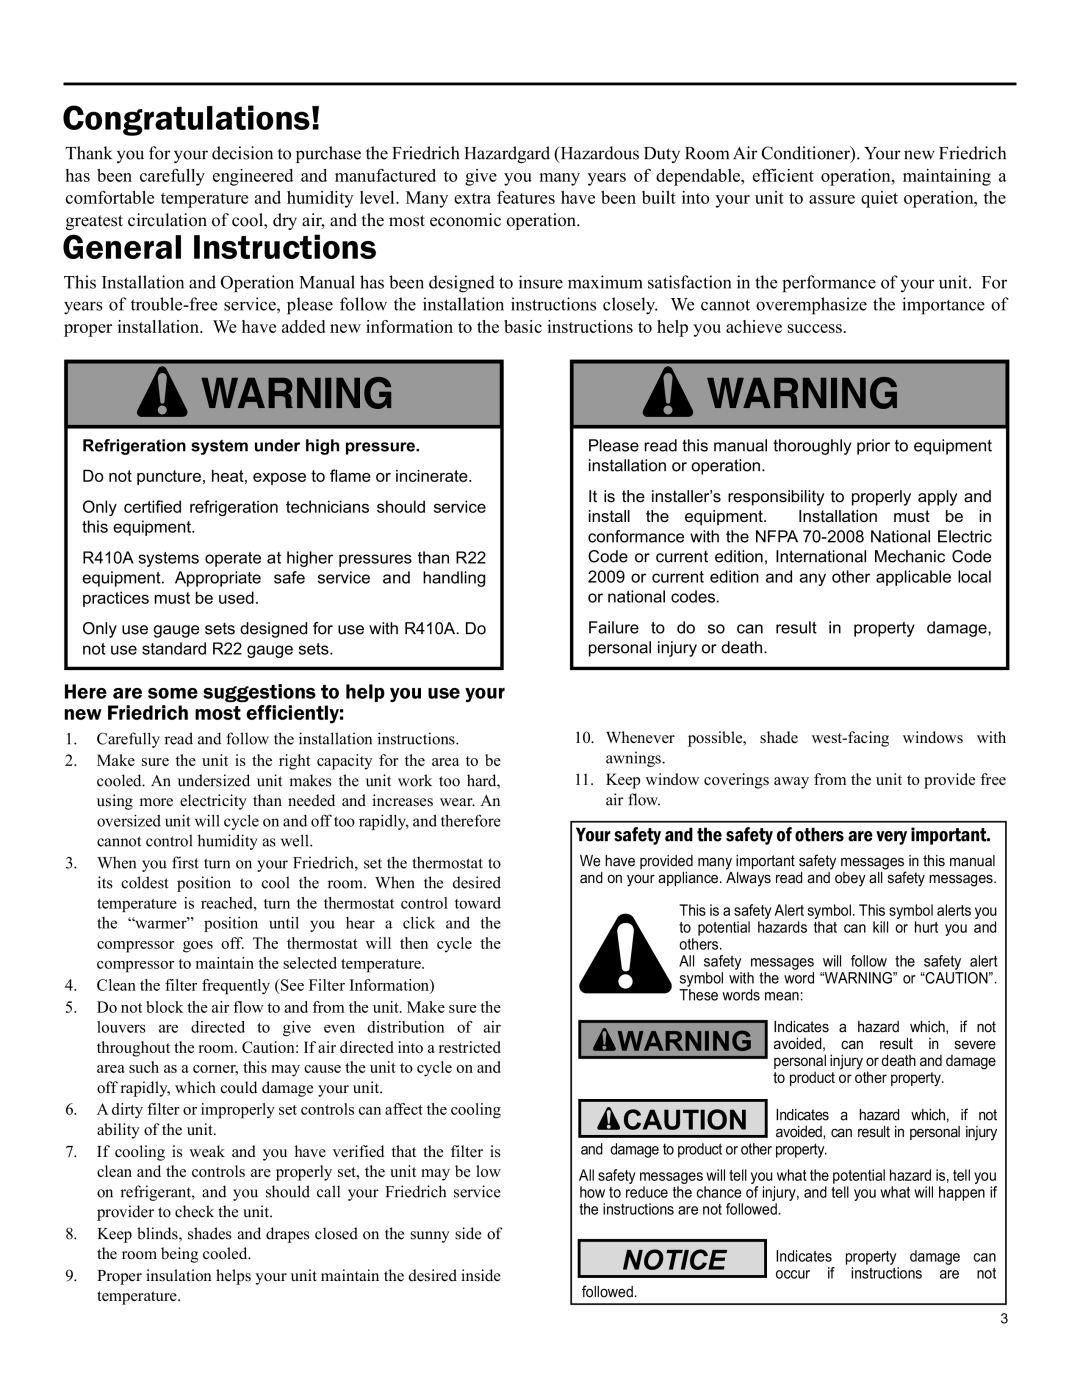 Friedrich SH15 operation manual Congratulations, General Instructions, Notice 